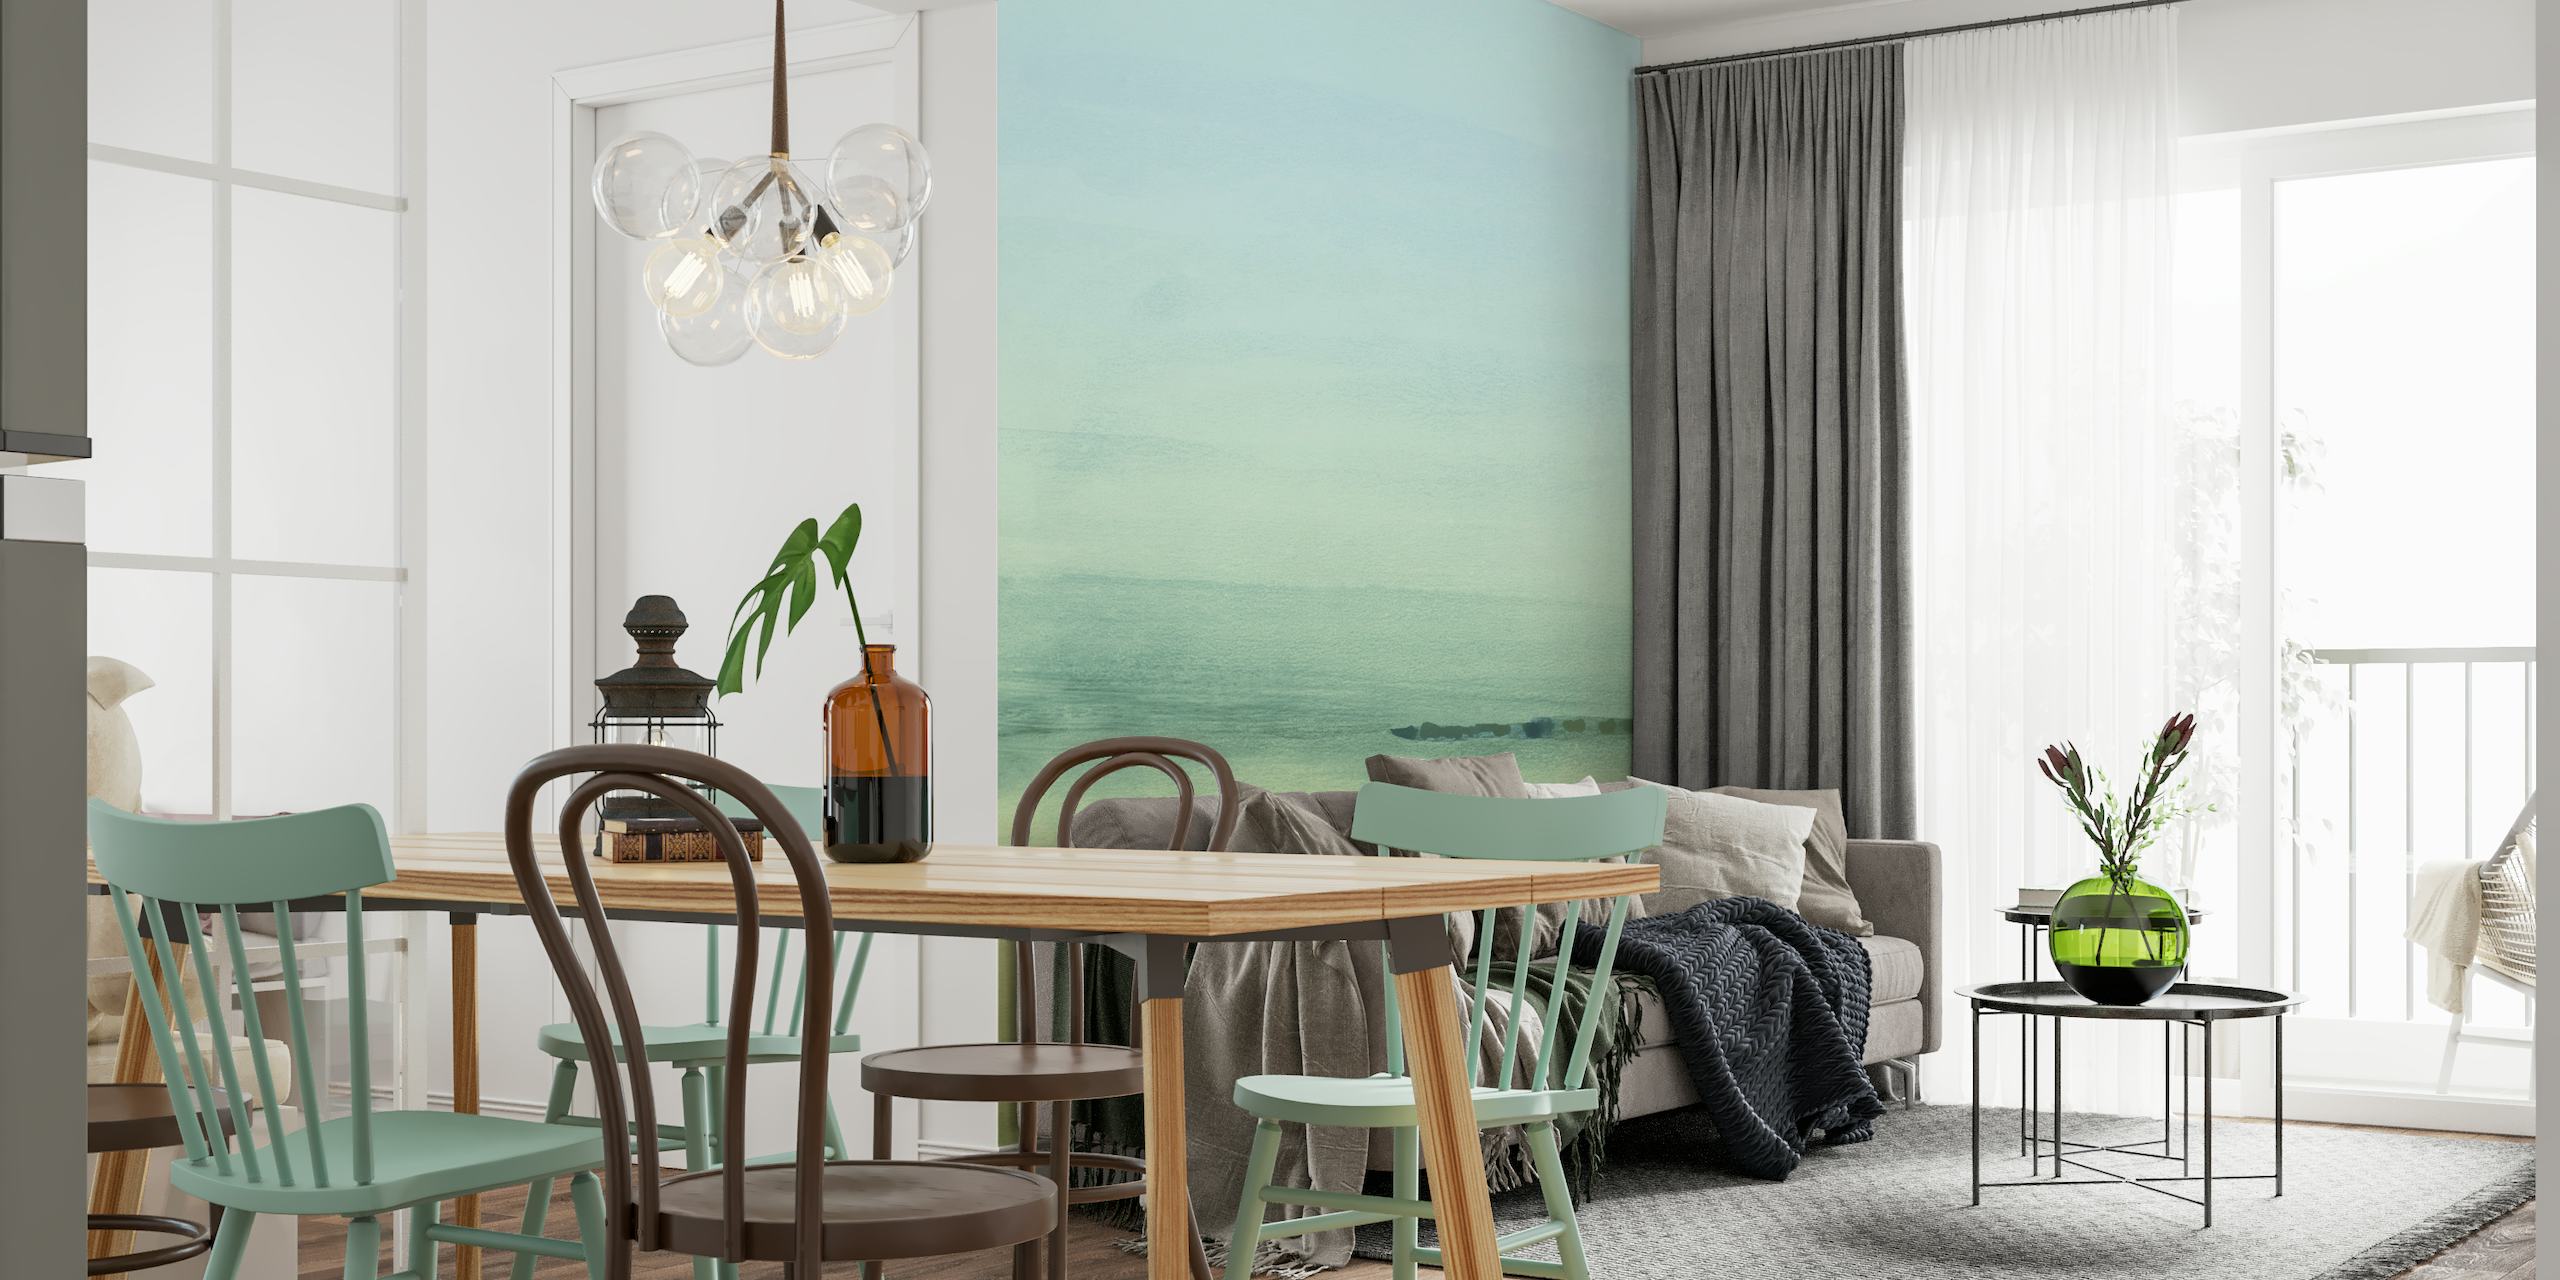 Abstract greenish watercolor wall mural depicting a tranquil horizon